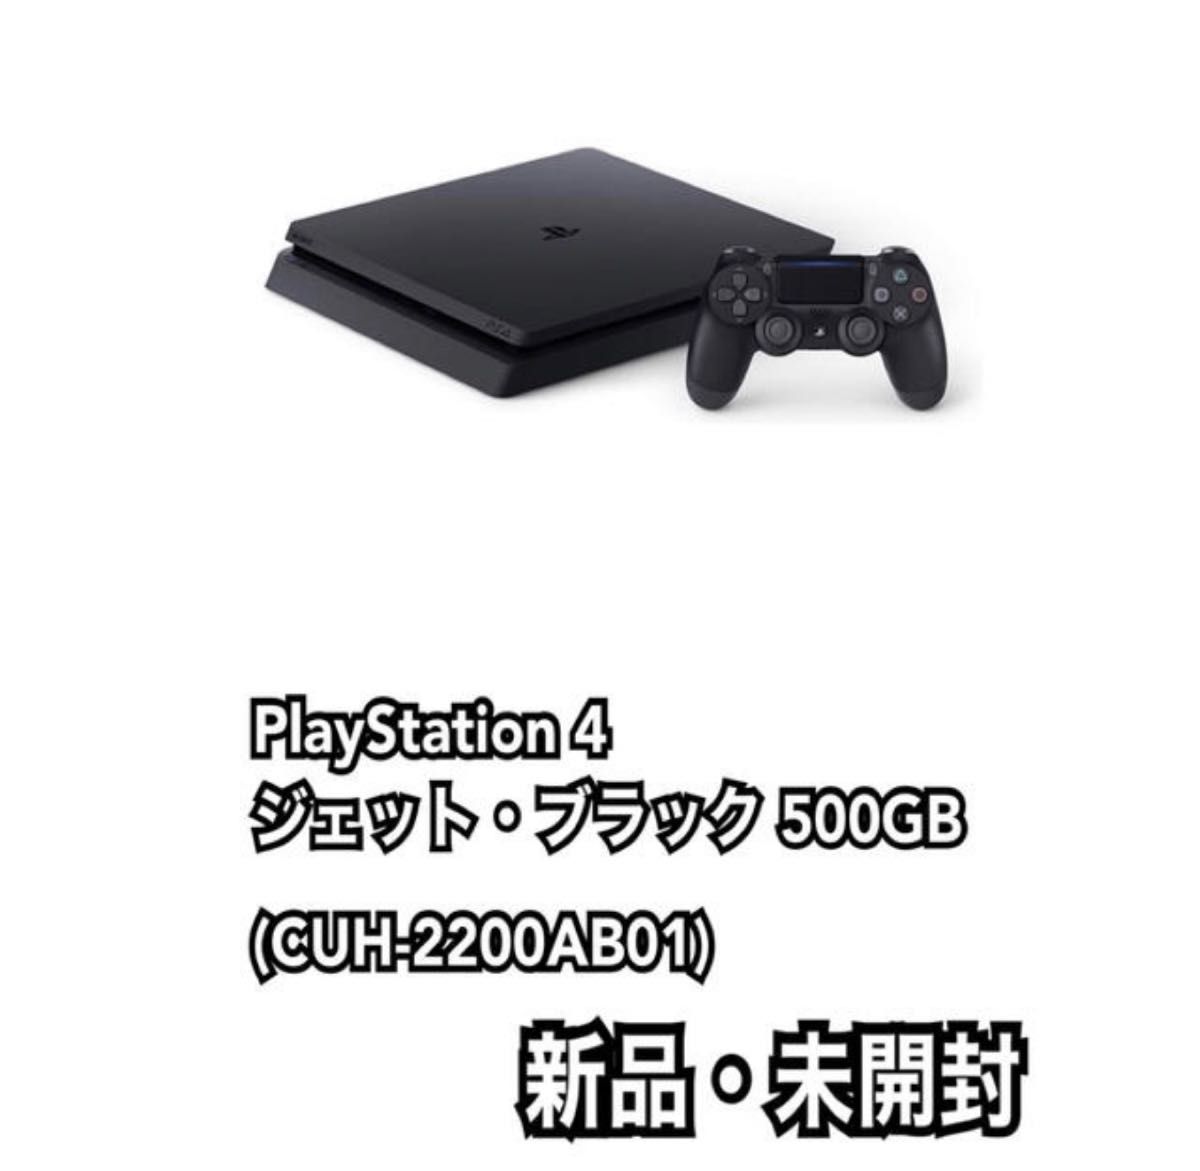 PlayStation 4 ジェット・ブラック 500GB - beringtime.in